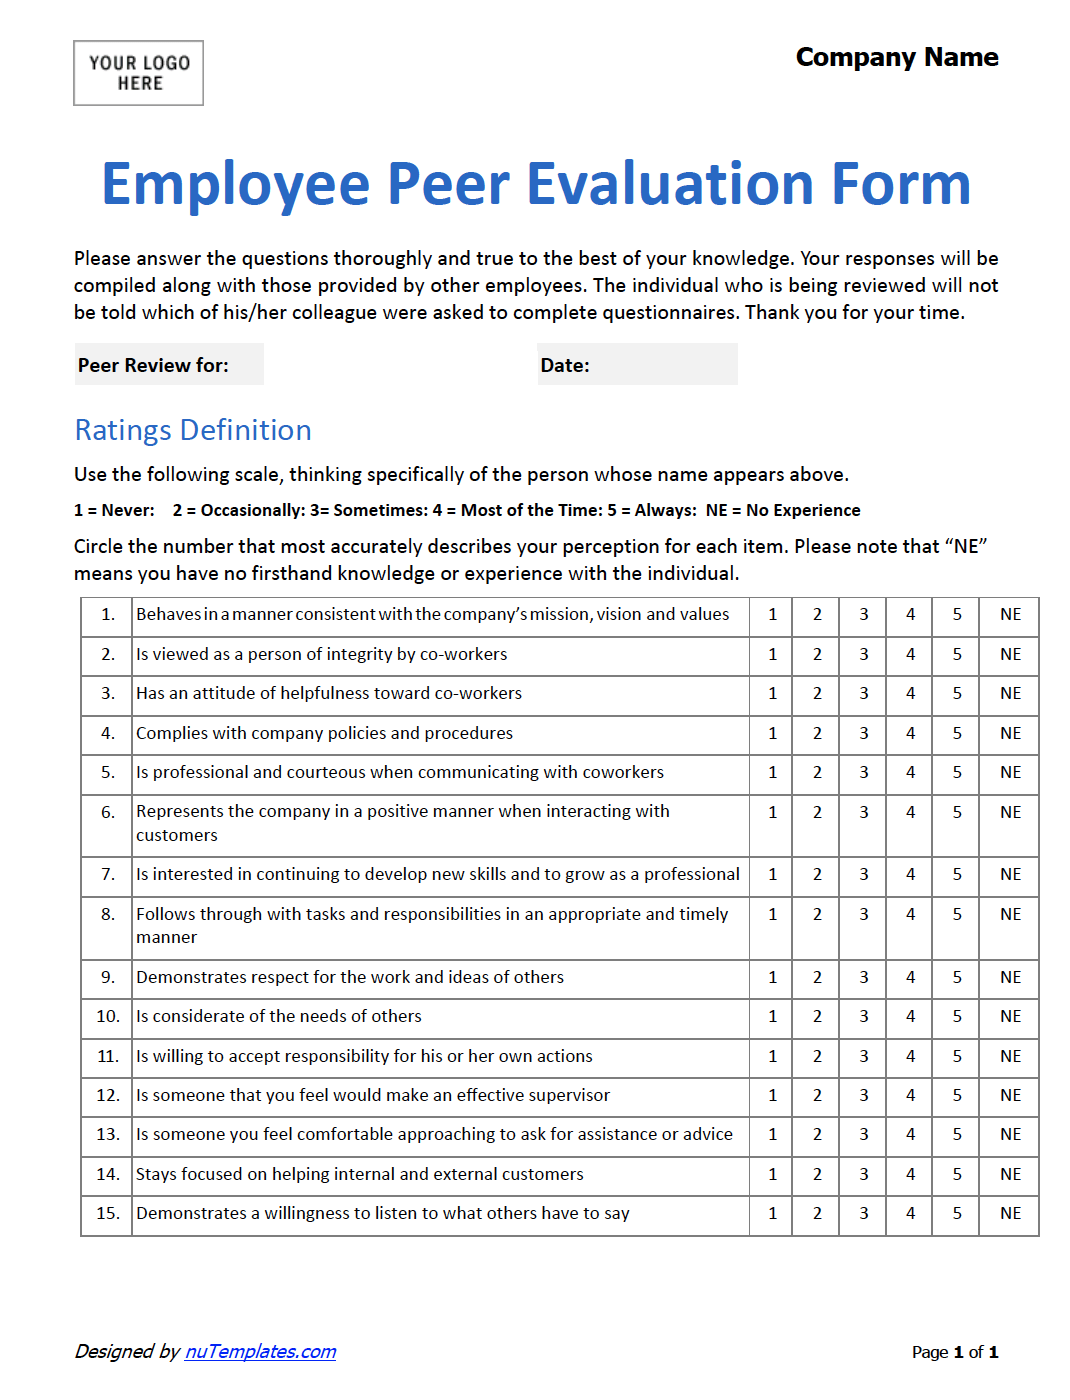 free-employee-peer-evaluation-form-2023-employeeform-net-vrogue